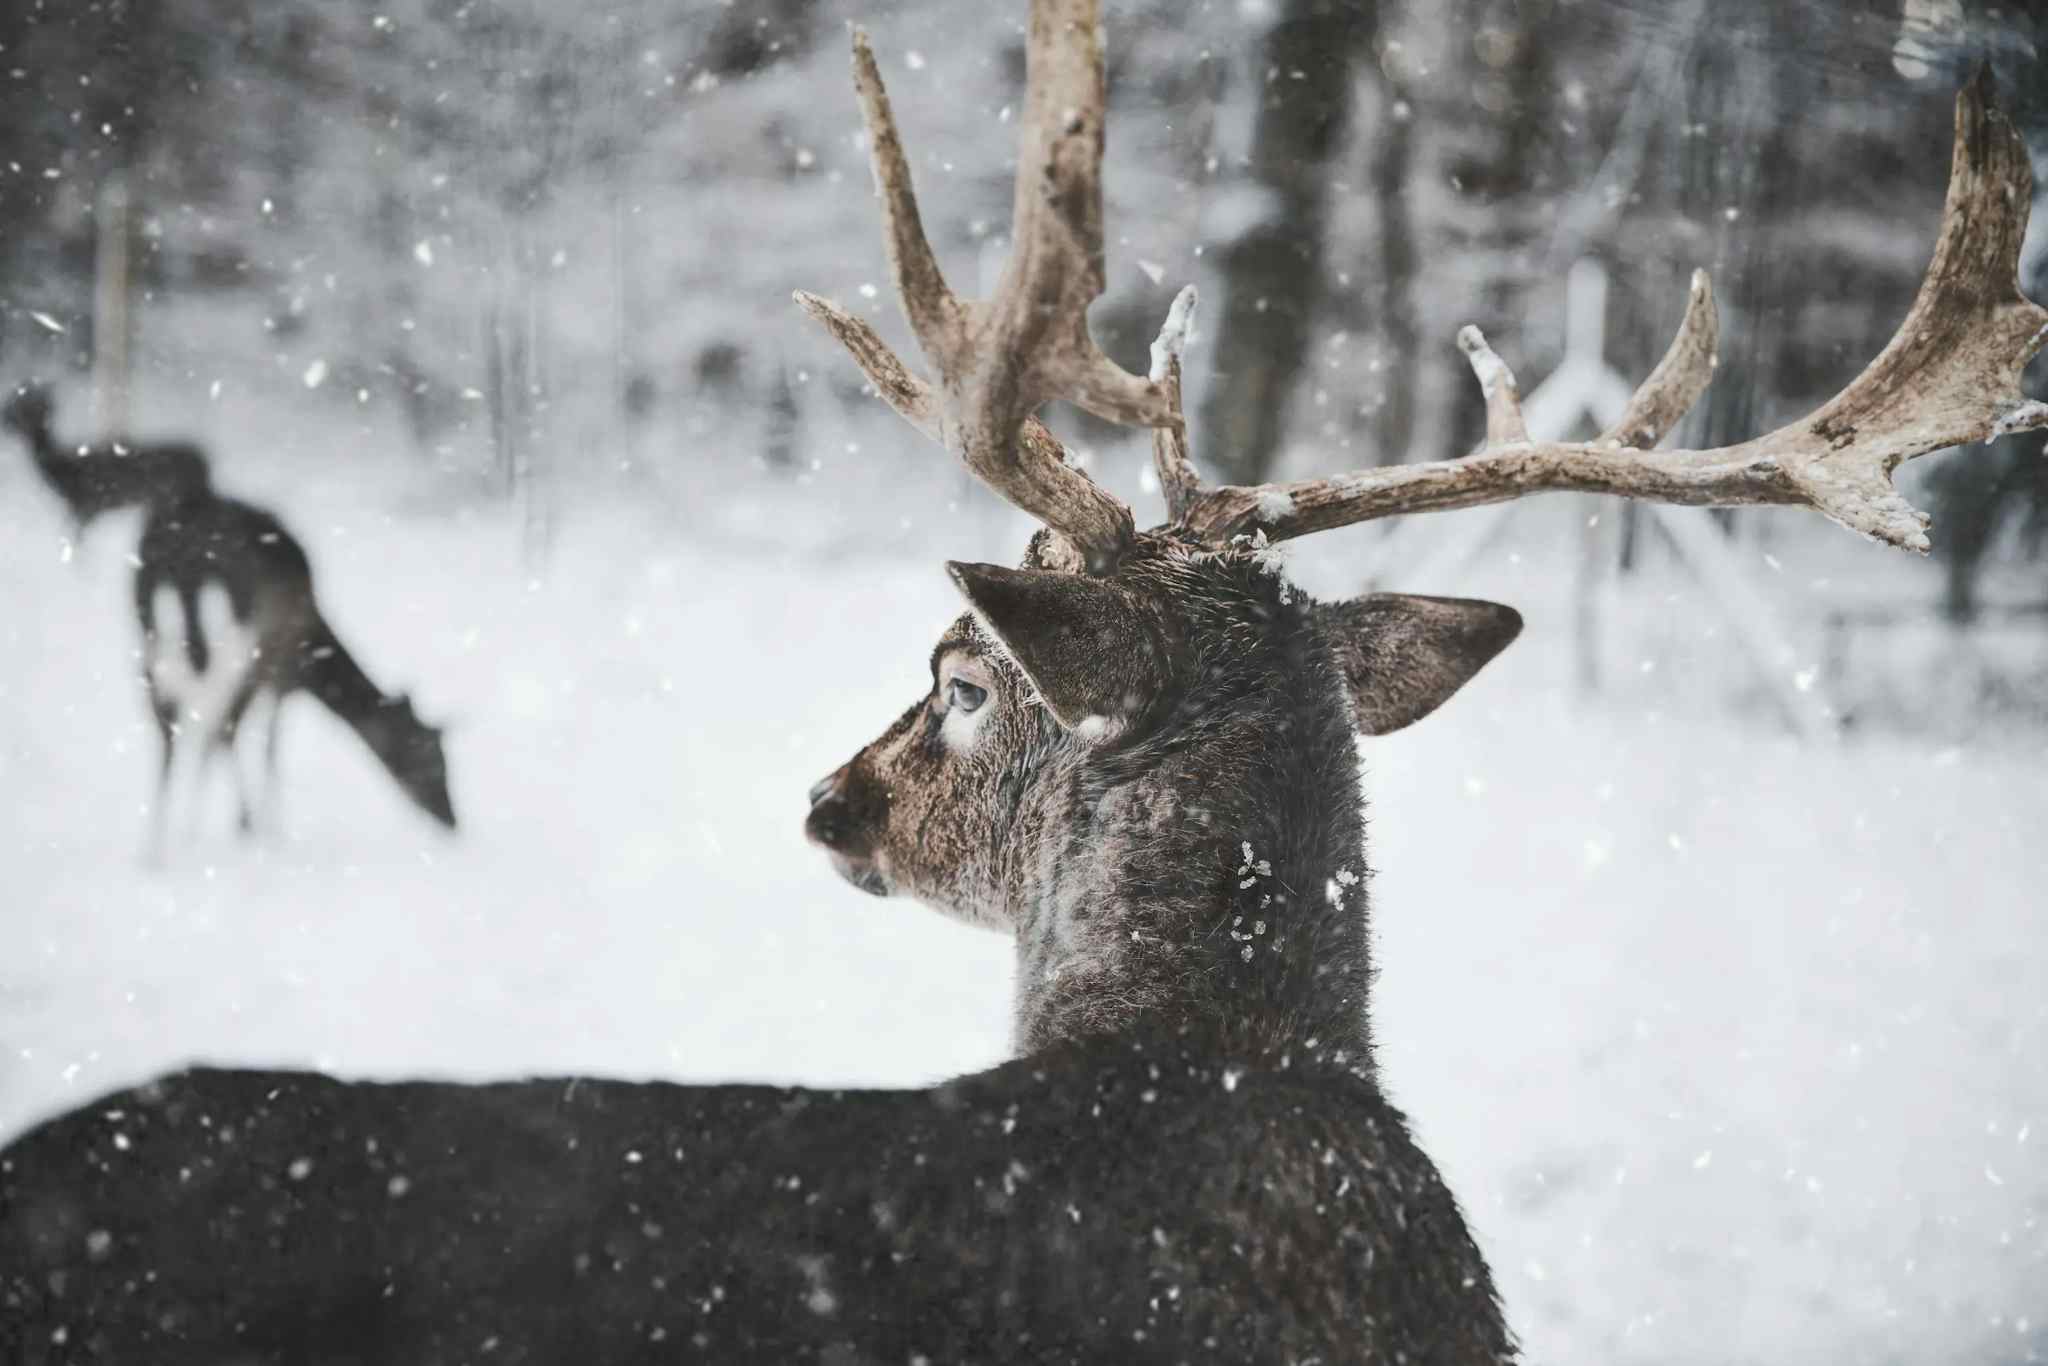 Winter wildlife in the Dolomites, Italy.